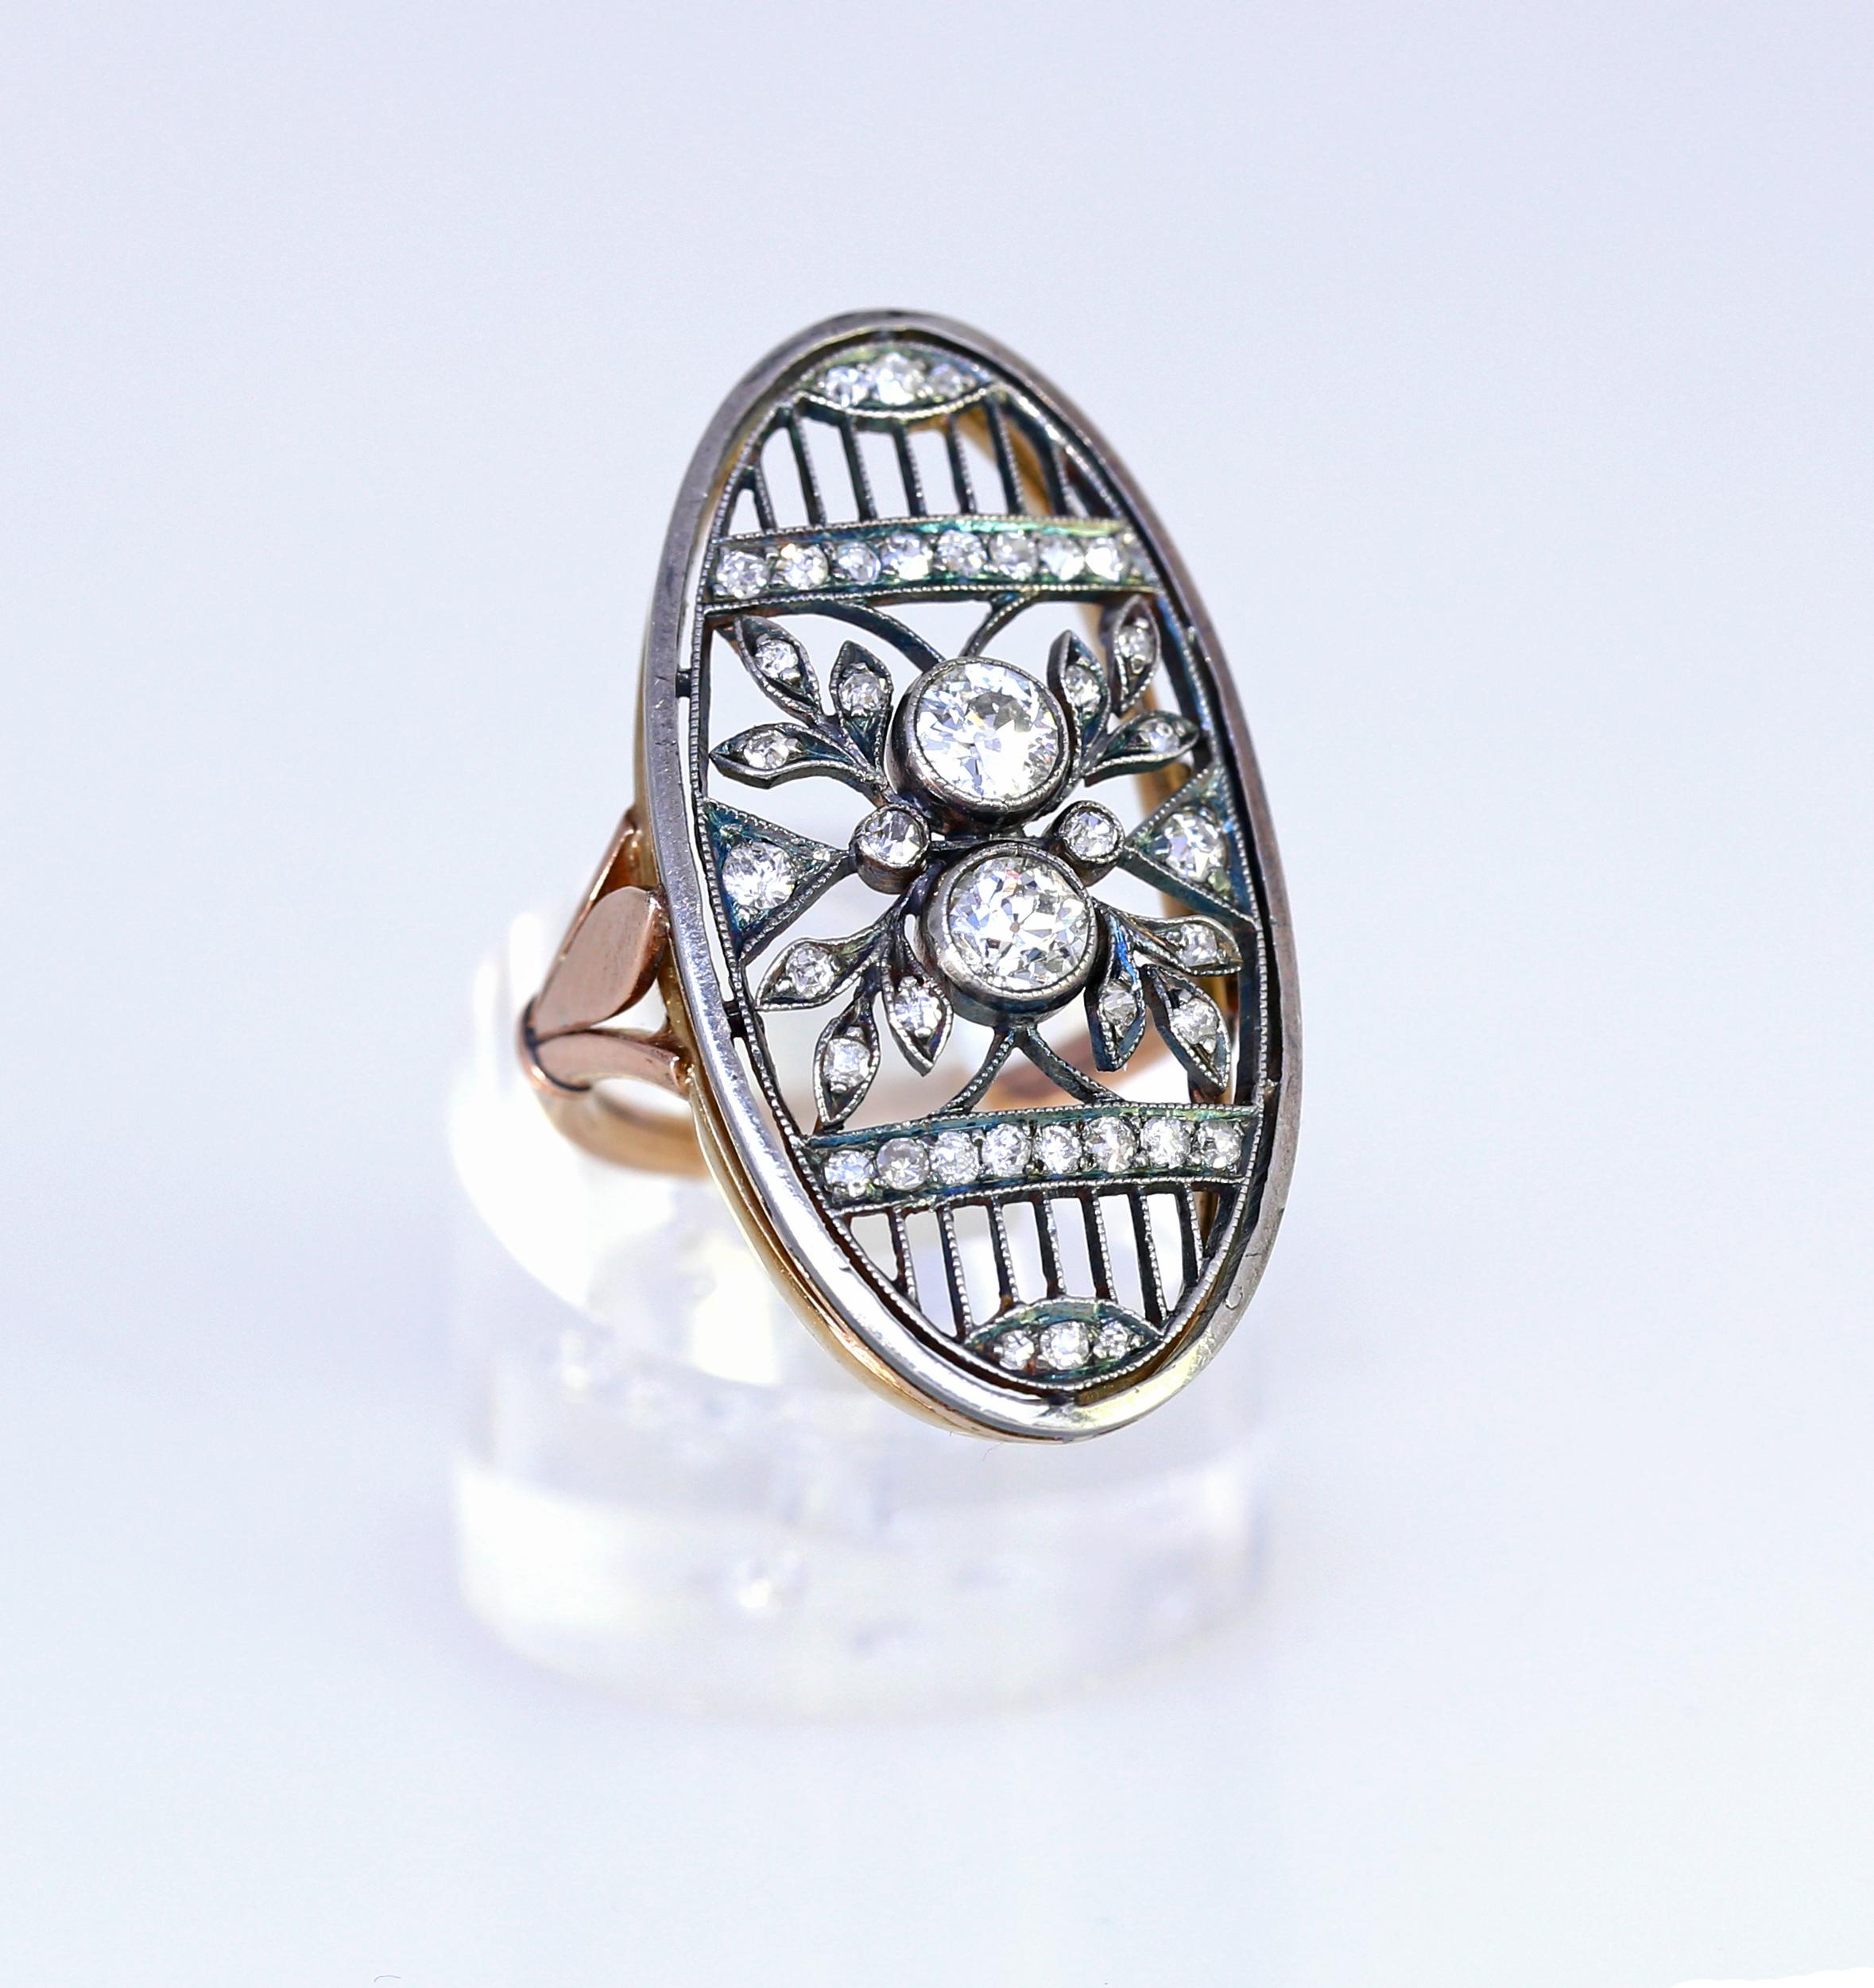 Round Cut Art Nouveau Russian Diamond Ring Gold Silver, 1890